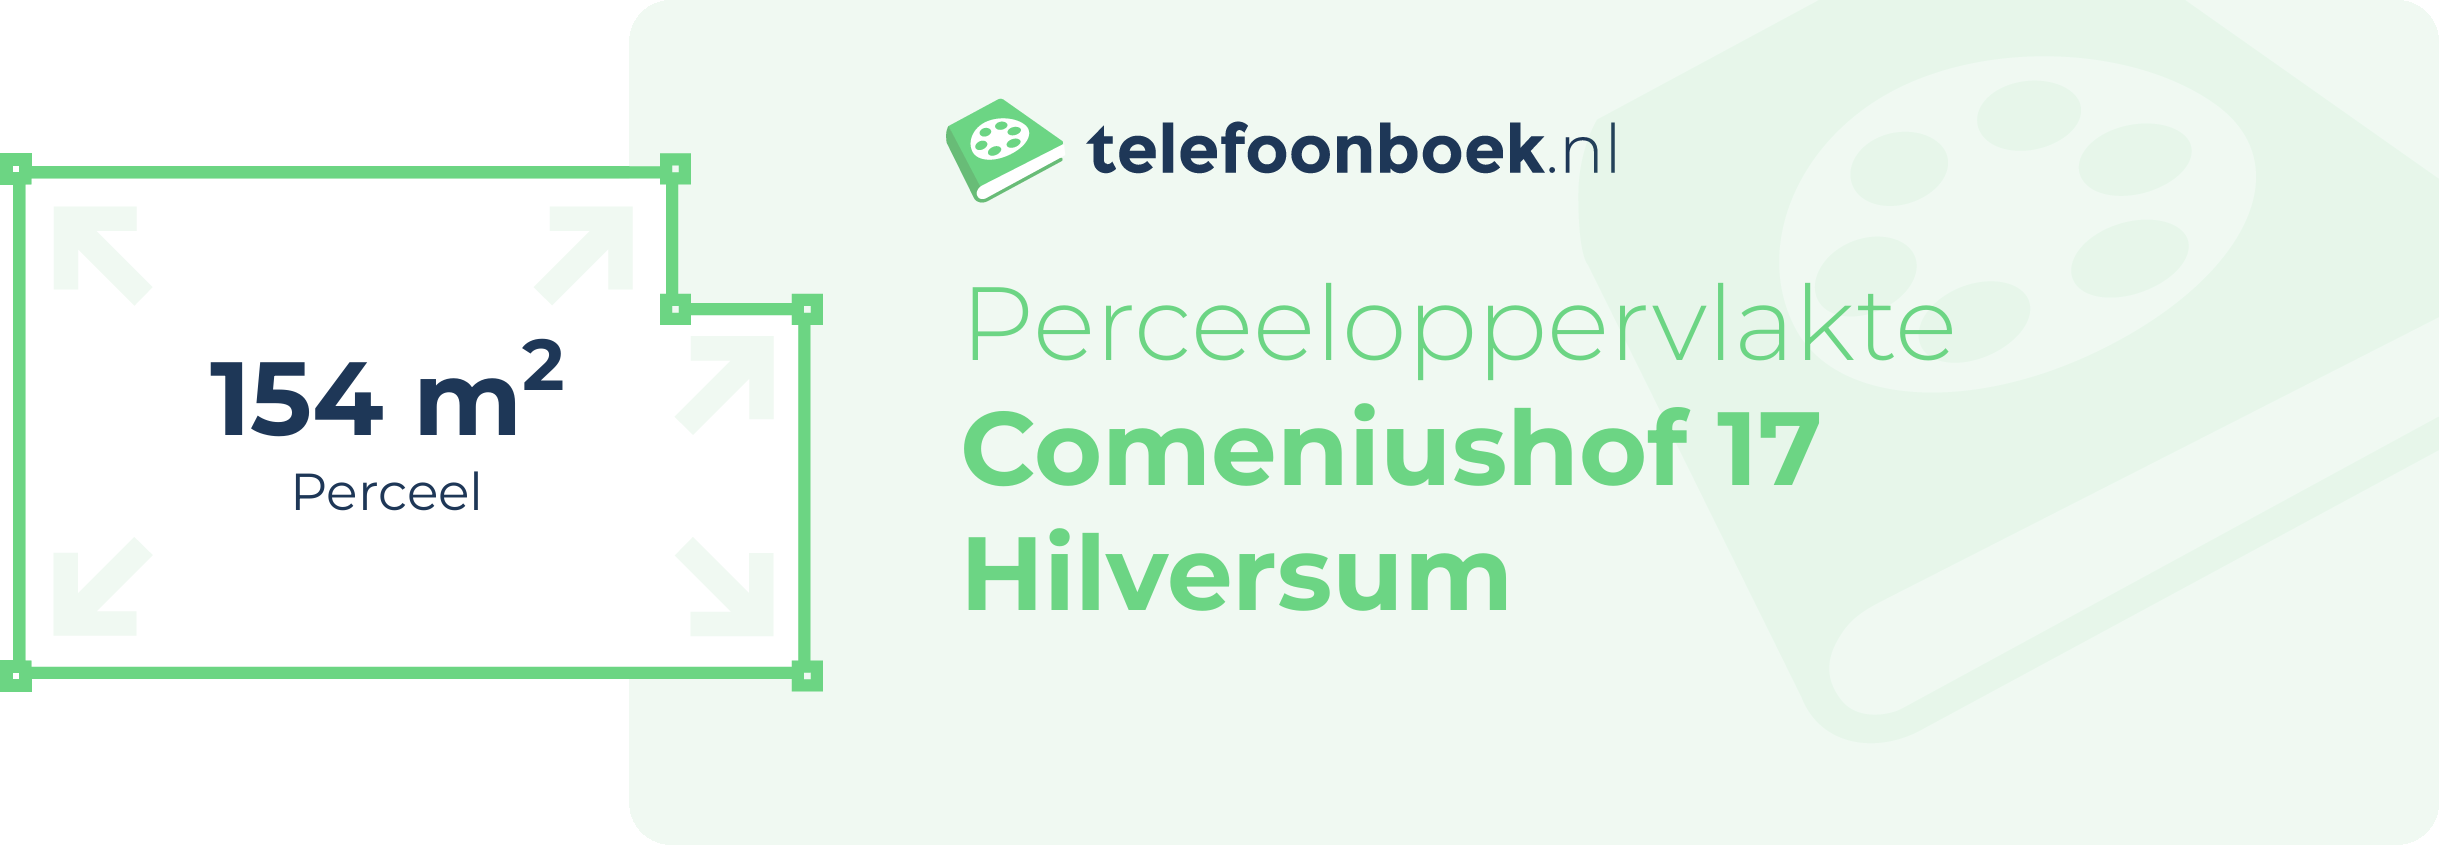 Perceeloppervlakte Comeniushof 17 Hilversum